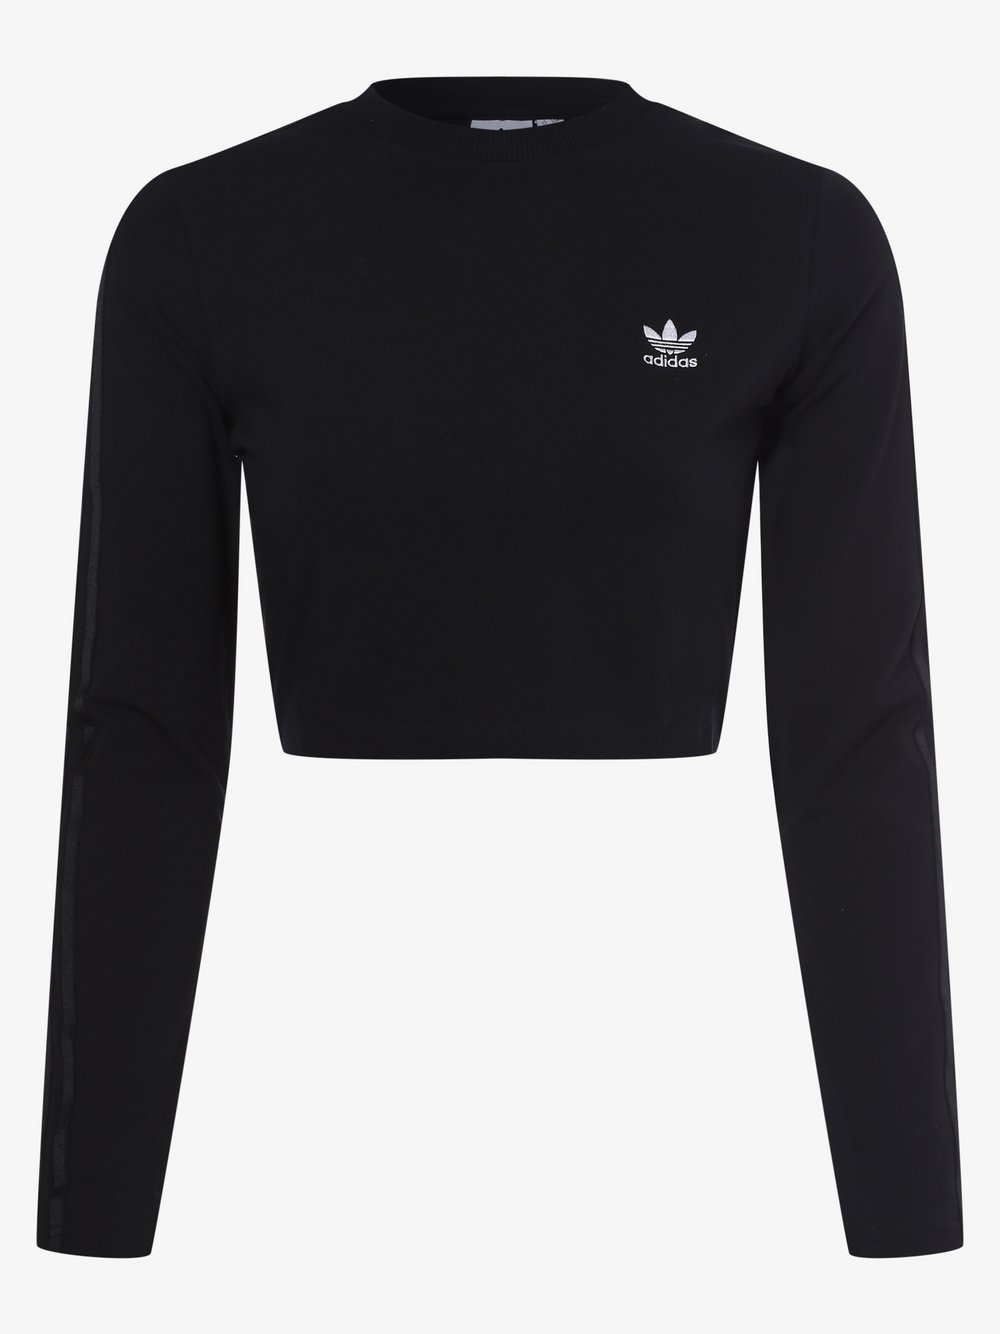 Adidas Originals - Damska koszulka z długim rękawem, czarny